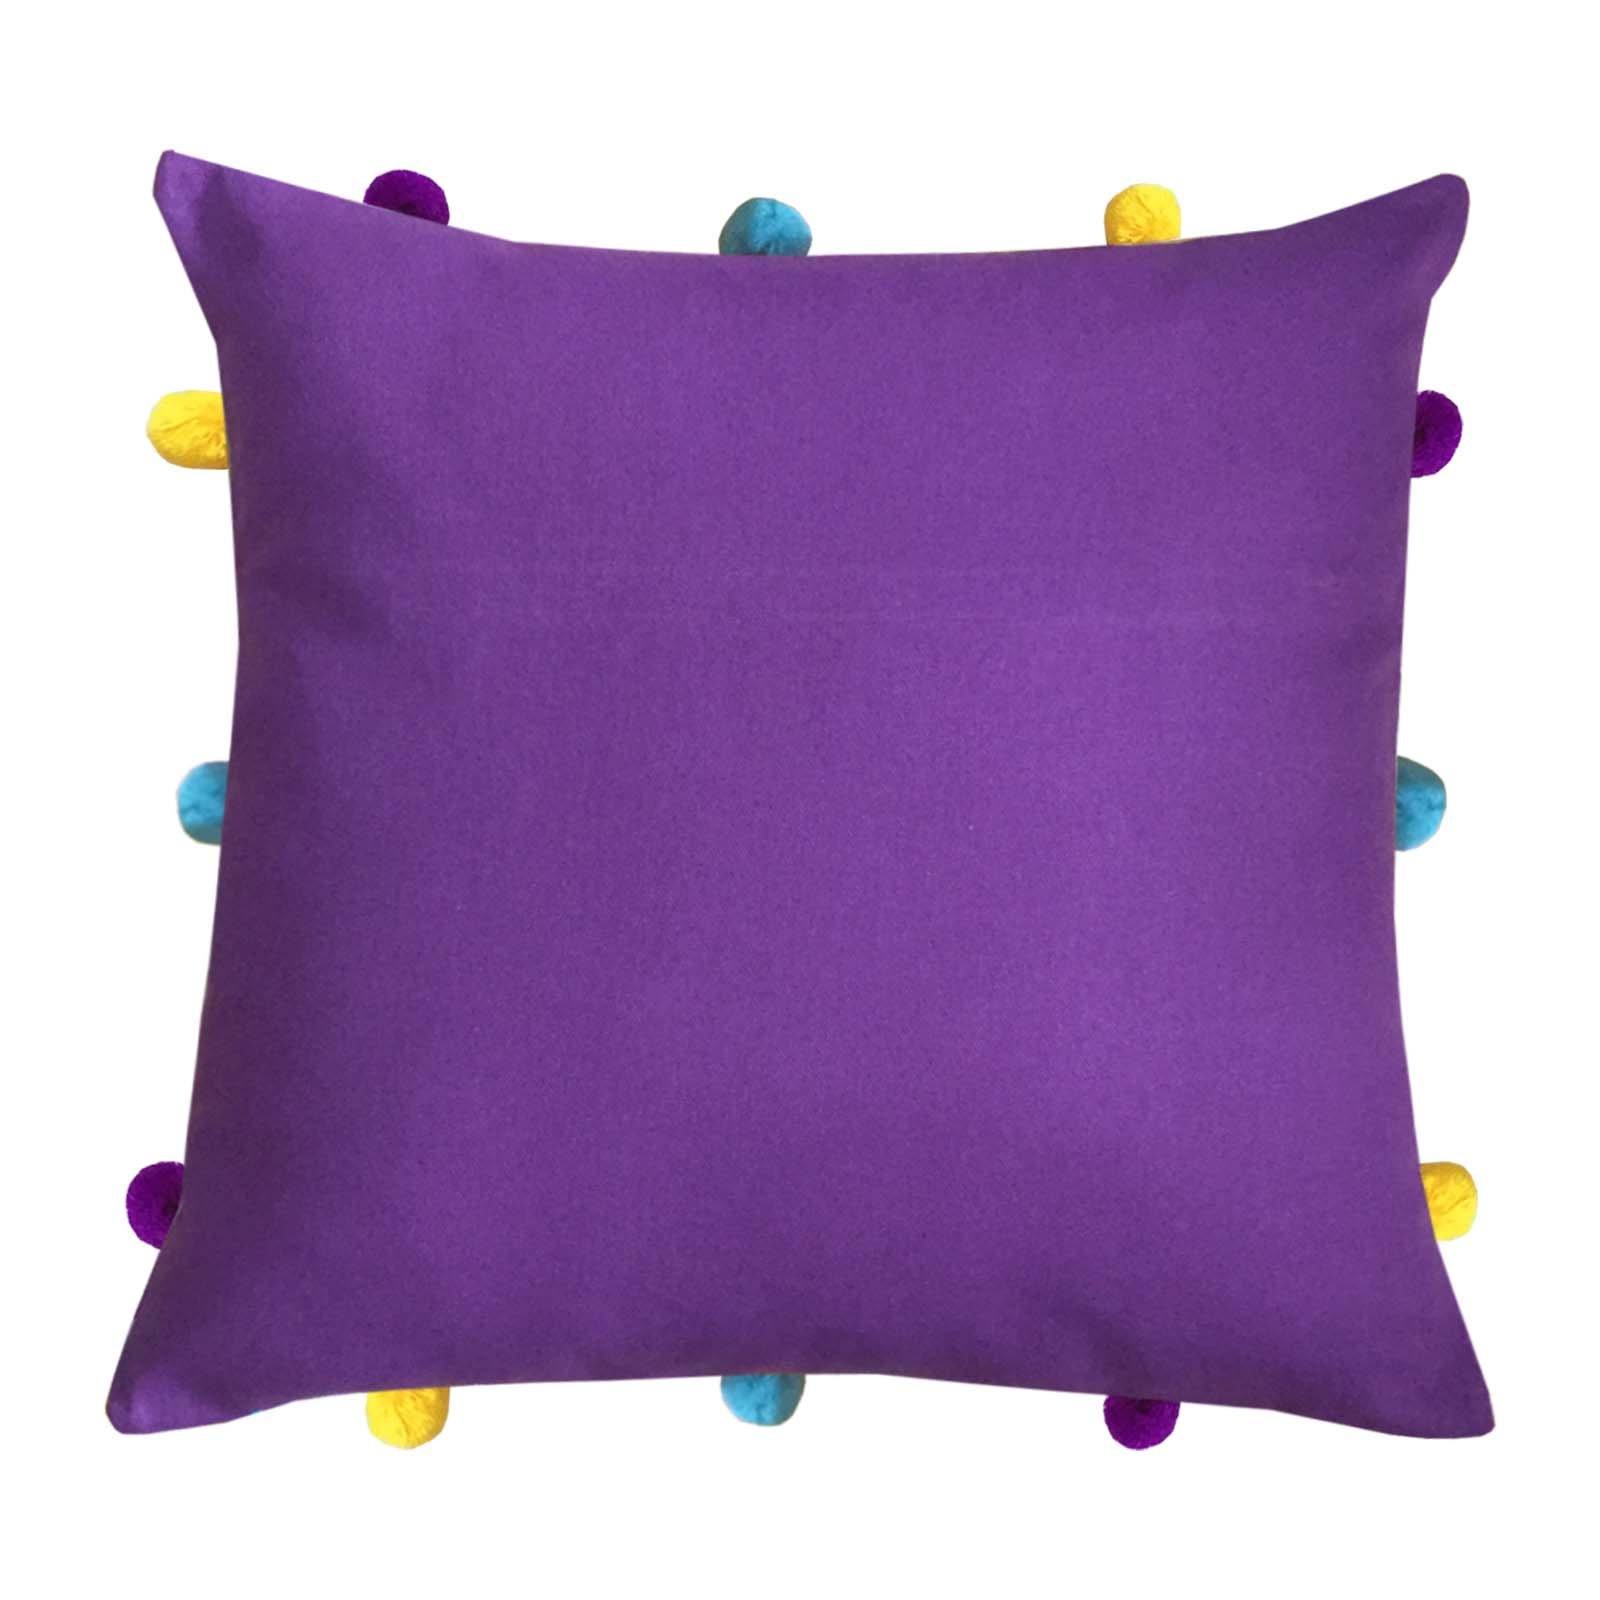 Lushomes Royal Lilac Cushion Cover with Colorful pom poms (Single pc, 12 x 12”) - Lushomes